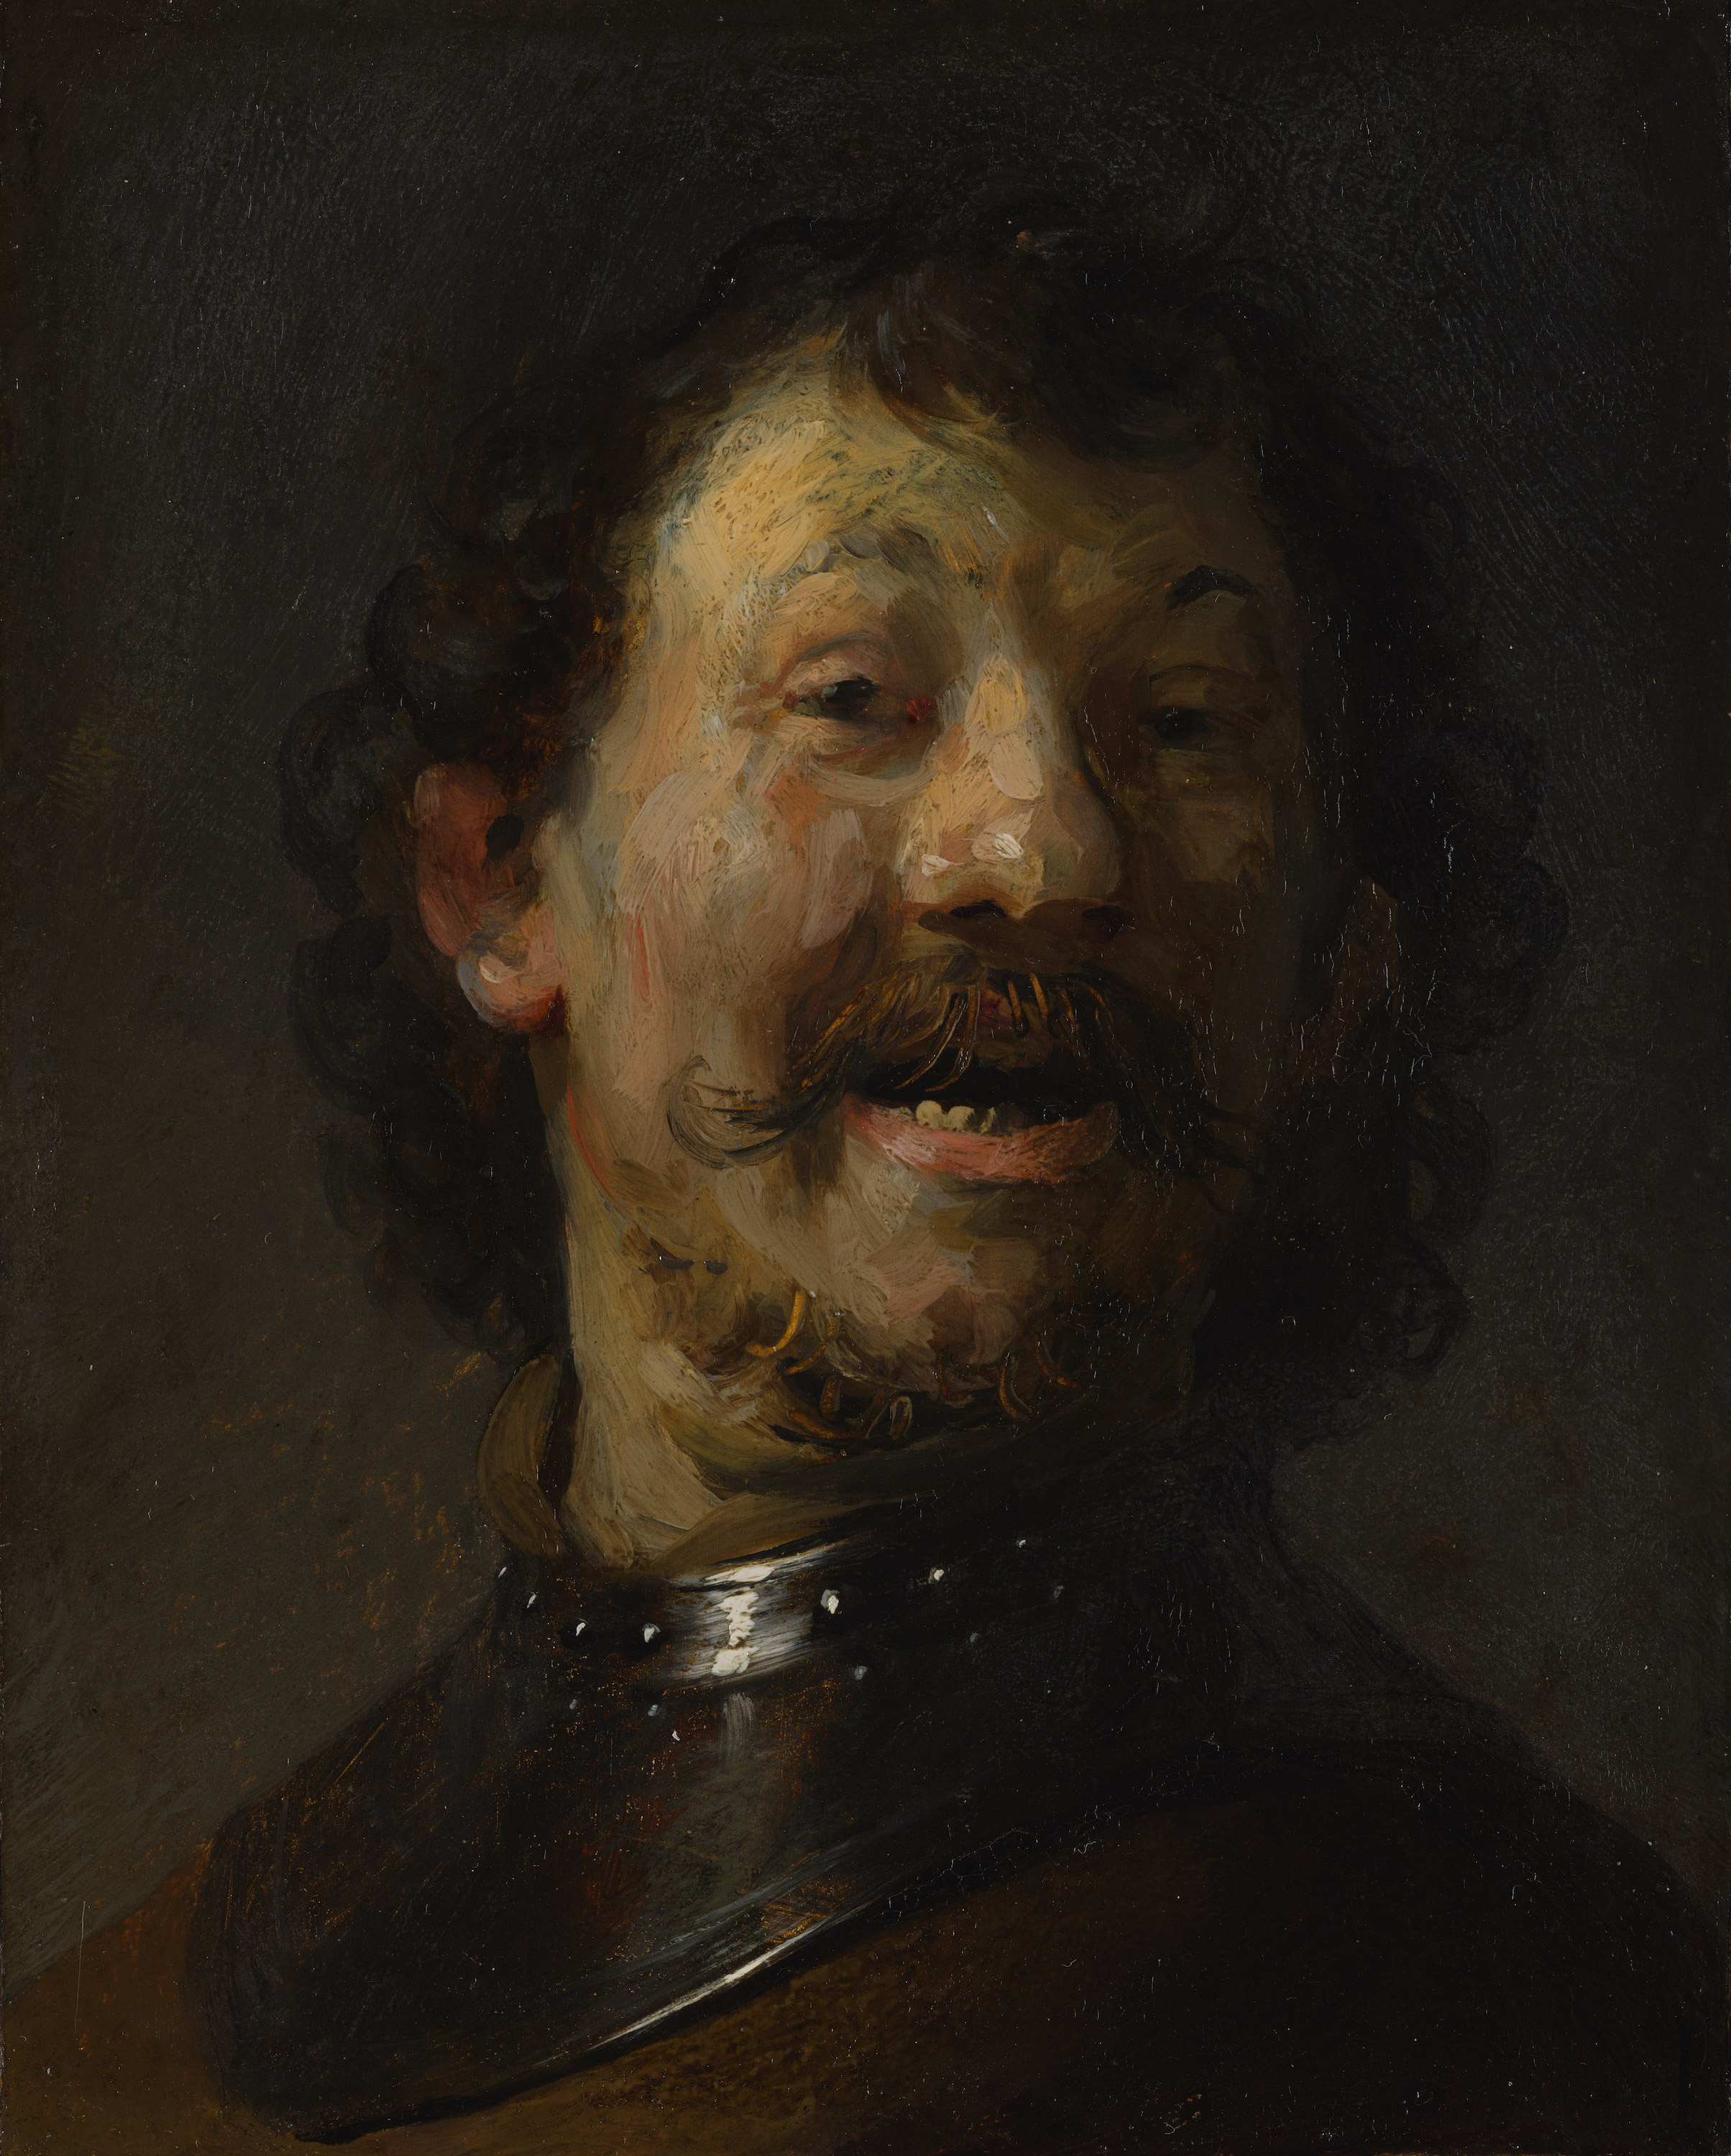 O Homem Sorridente by Rembrandt van Rijn - c. 1629 - 1630 - 15.3 x 12.2 cm 